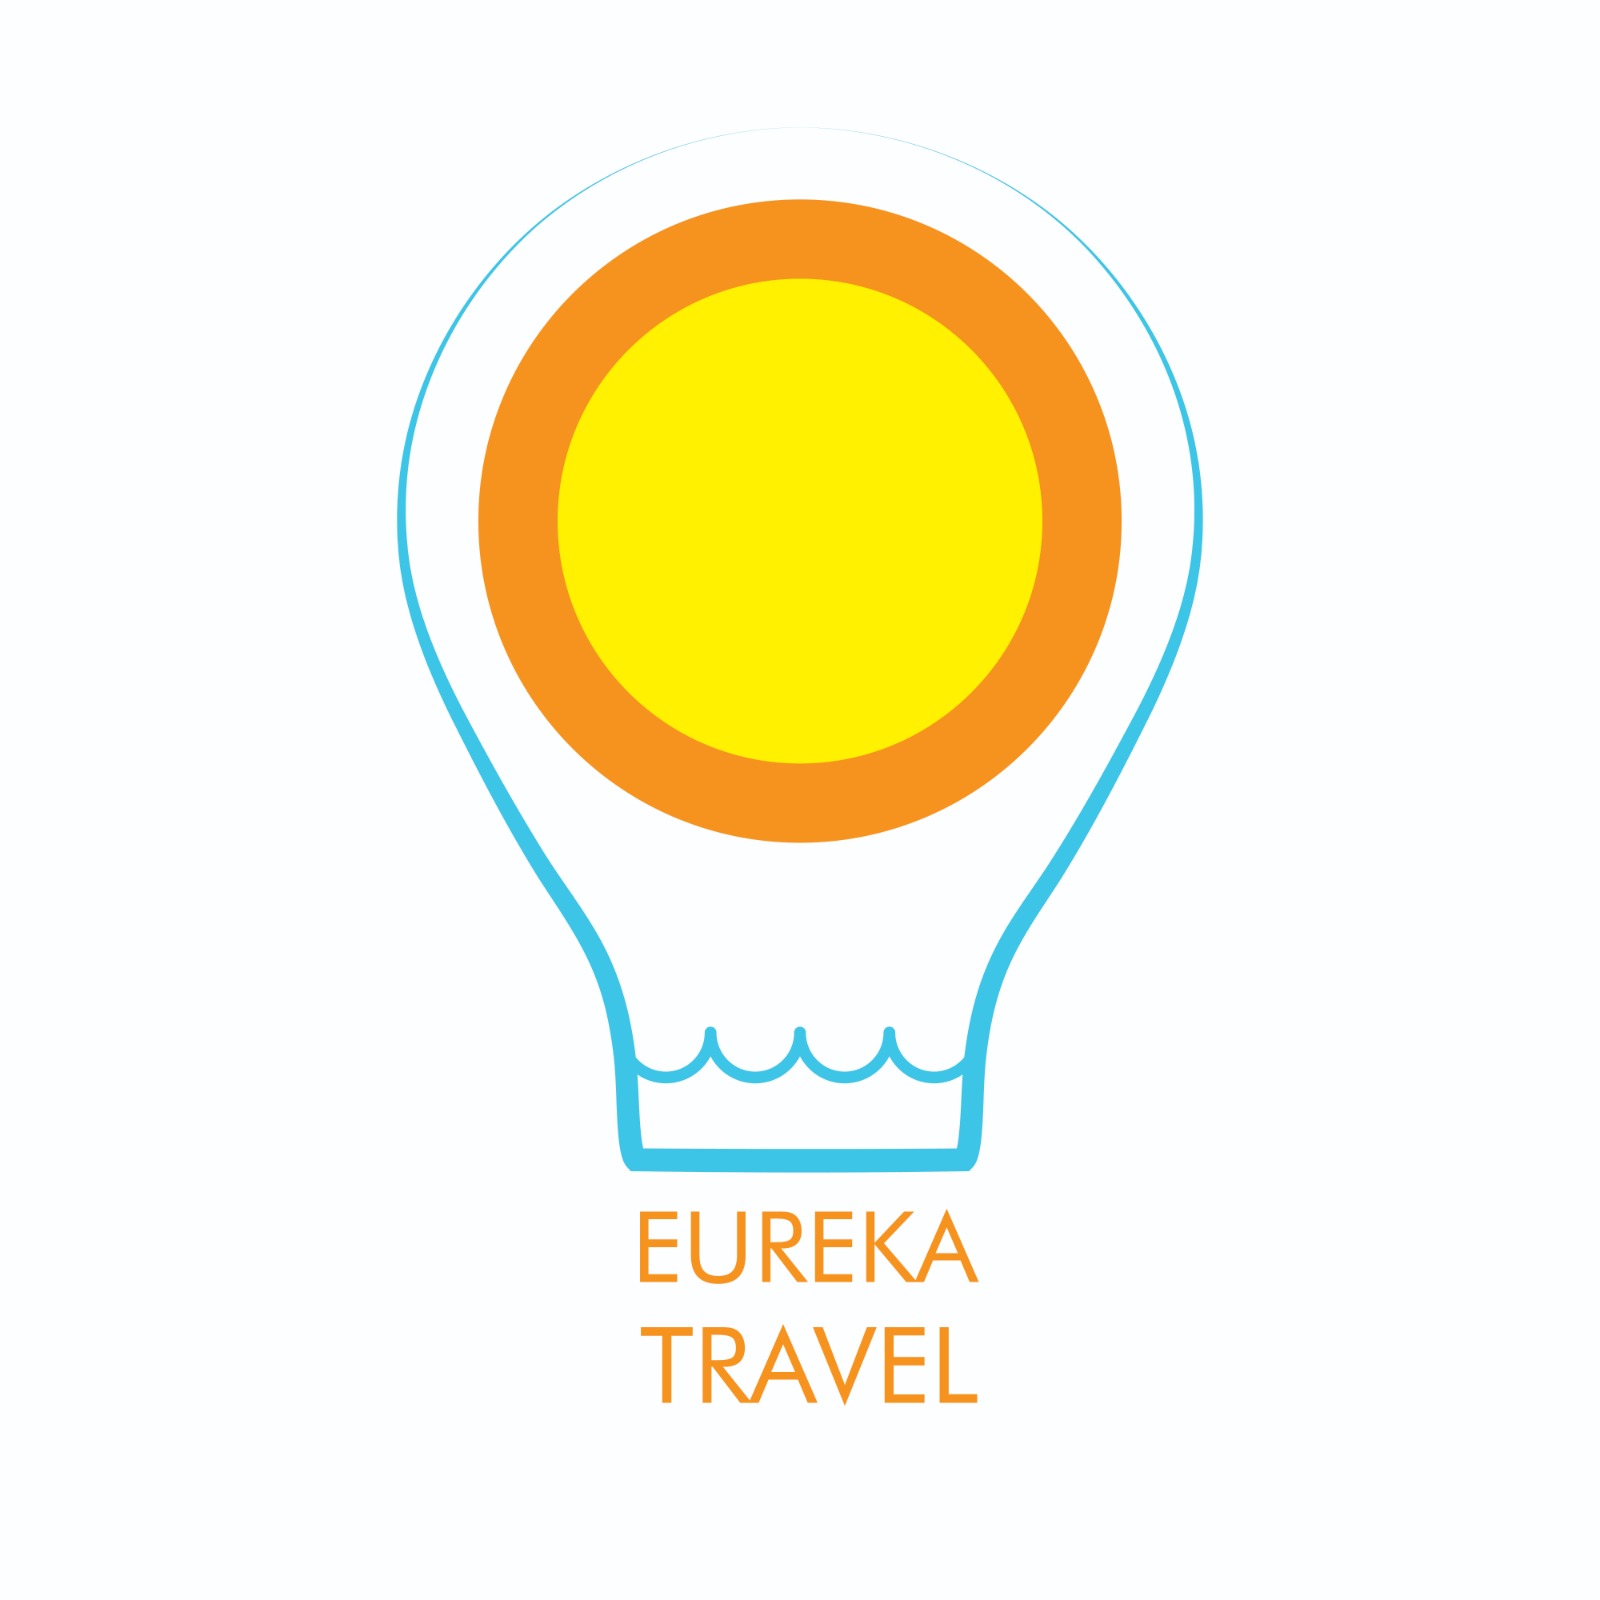 eureka travel via morgagni